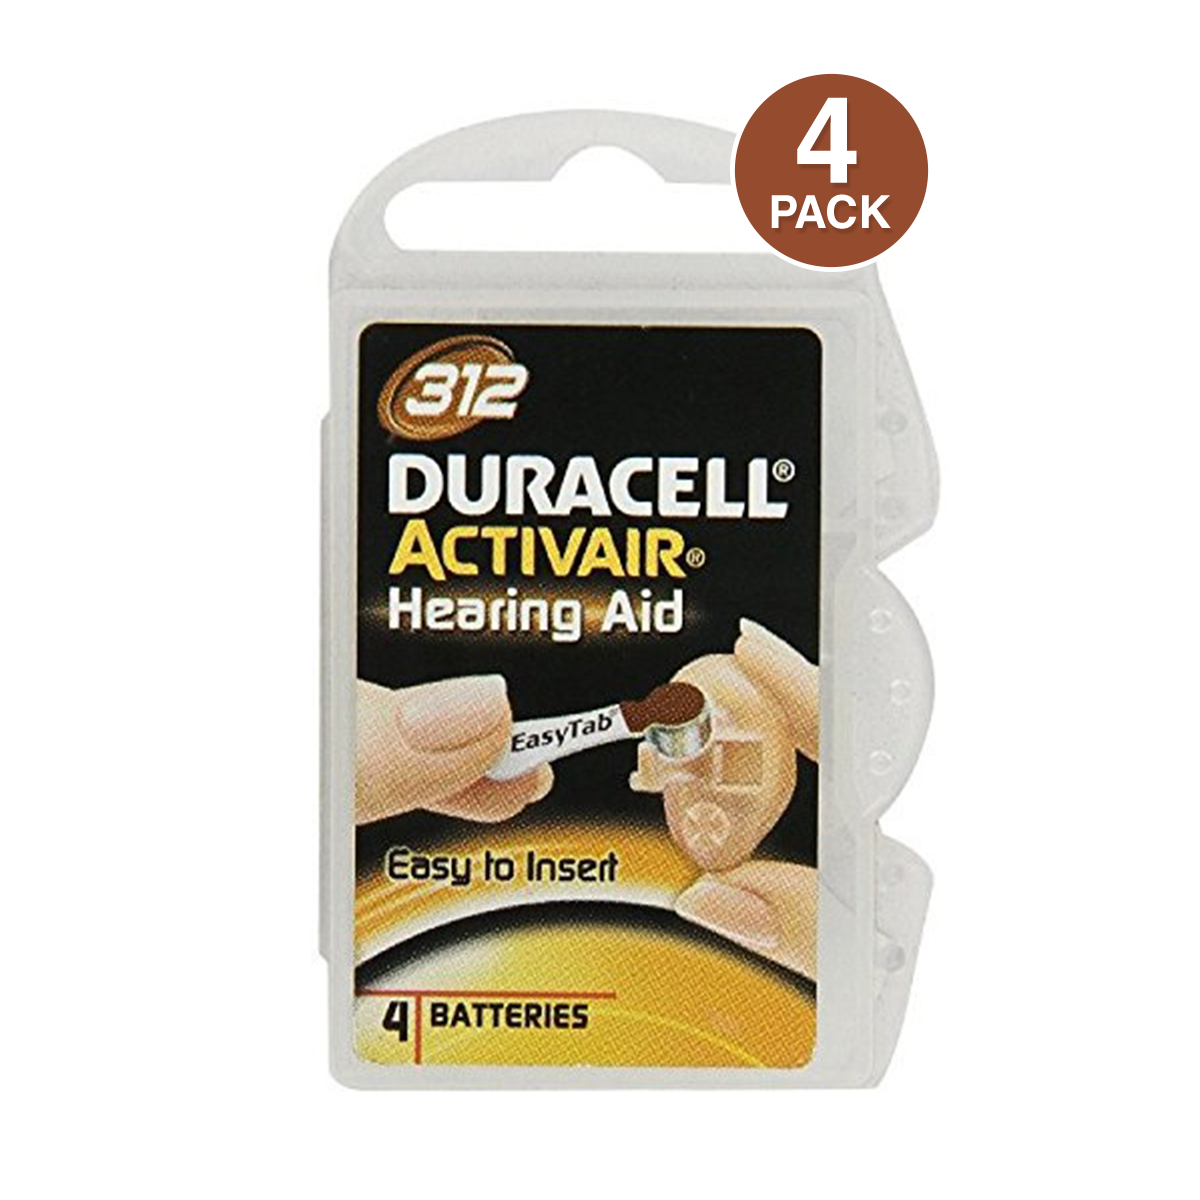 Duracell Activair 312 Hearing Aid Battery (4 PCS)